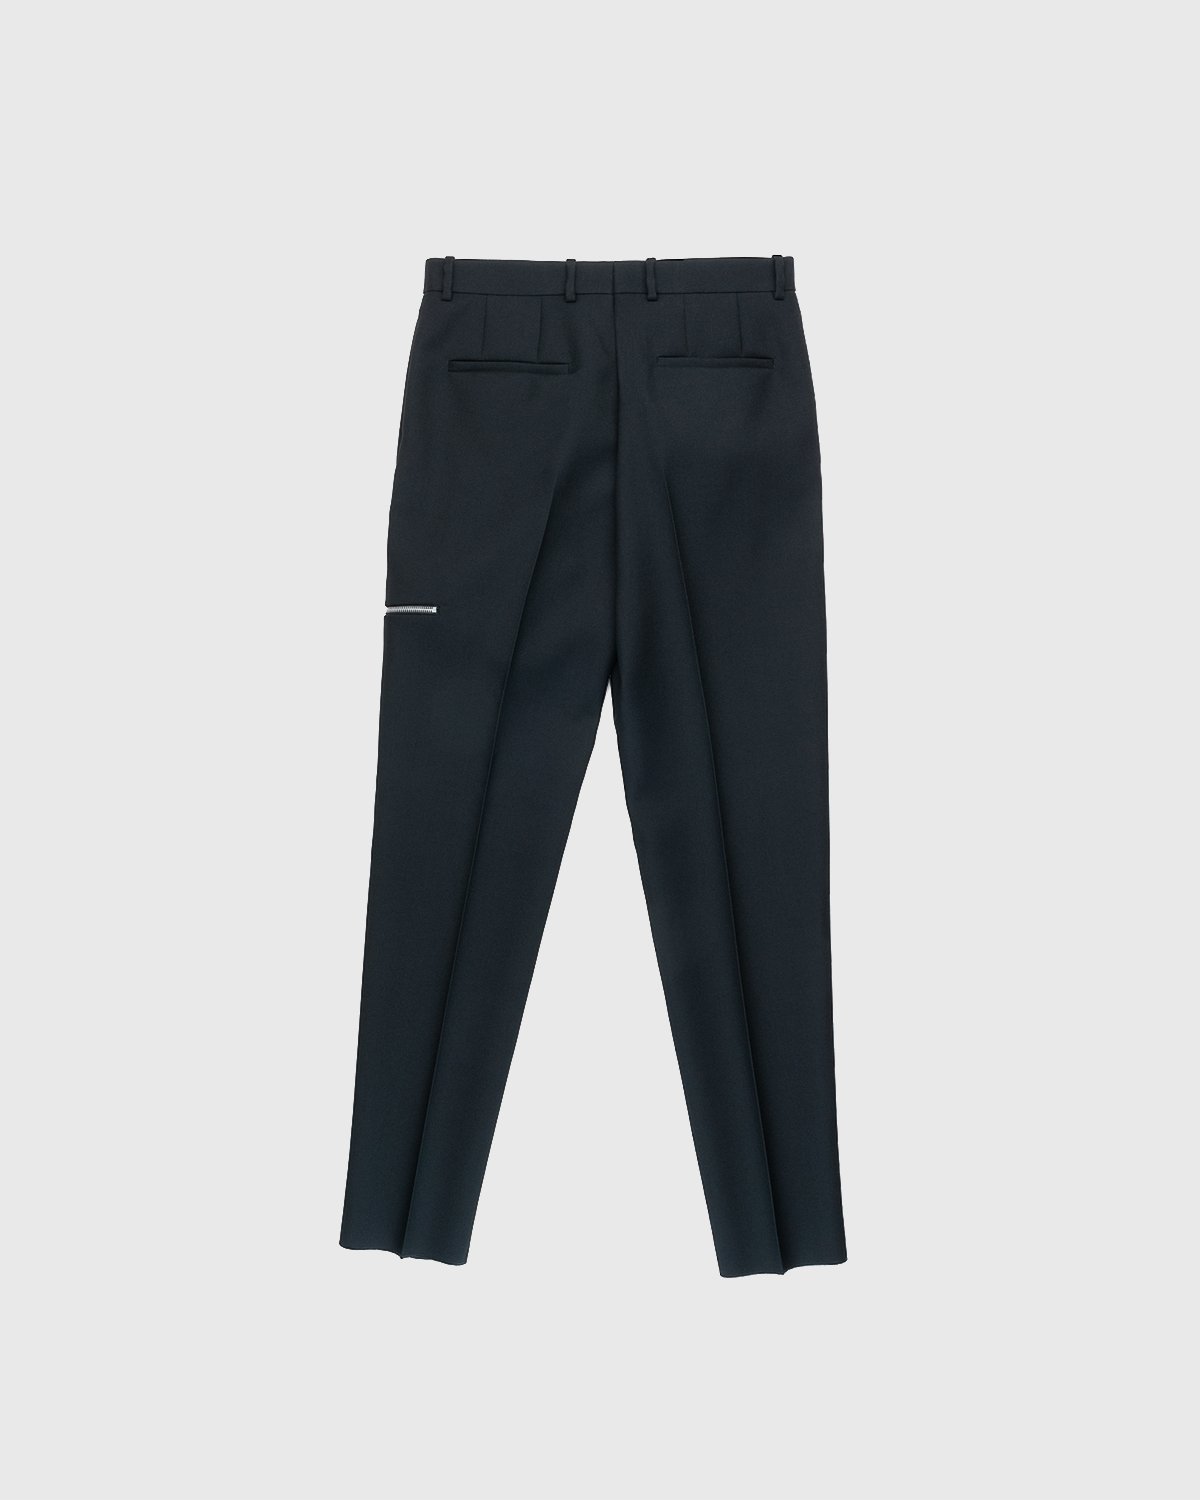 Jil Sander - Zip Pocket Trousers Black - Clothing - Black - Image 2